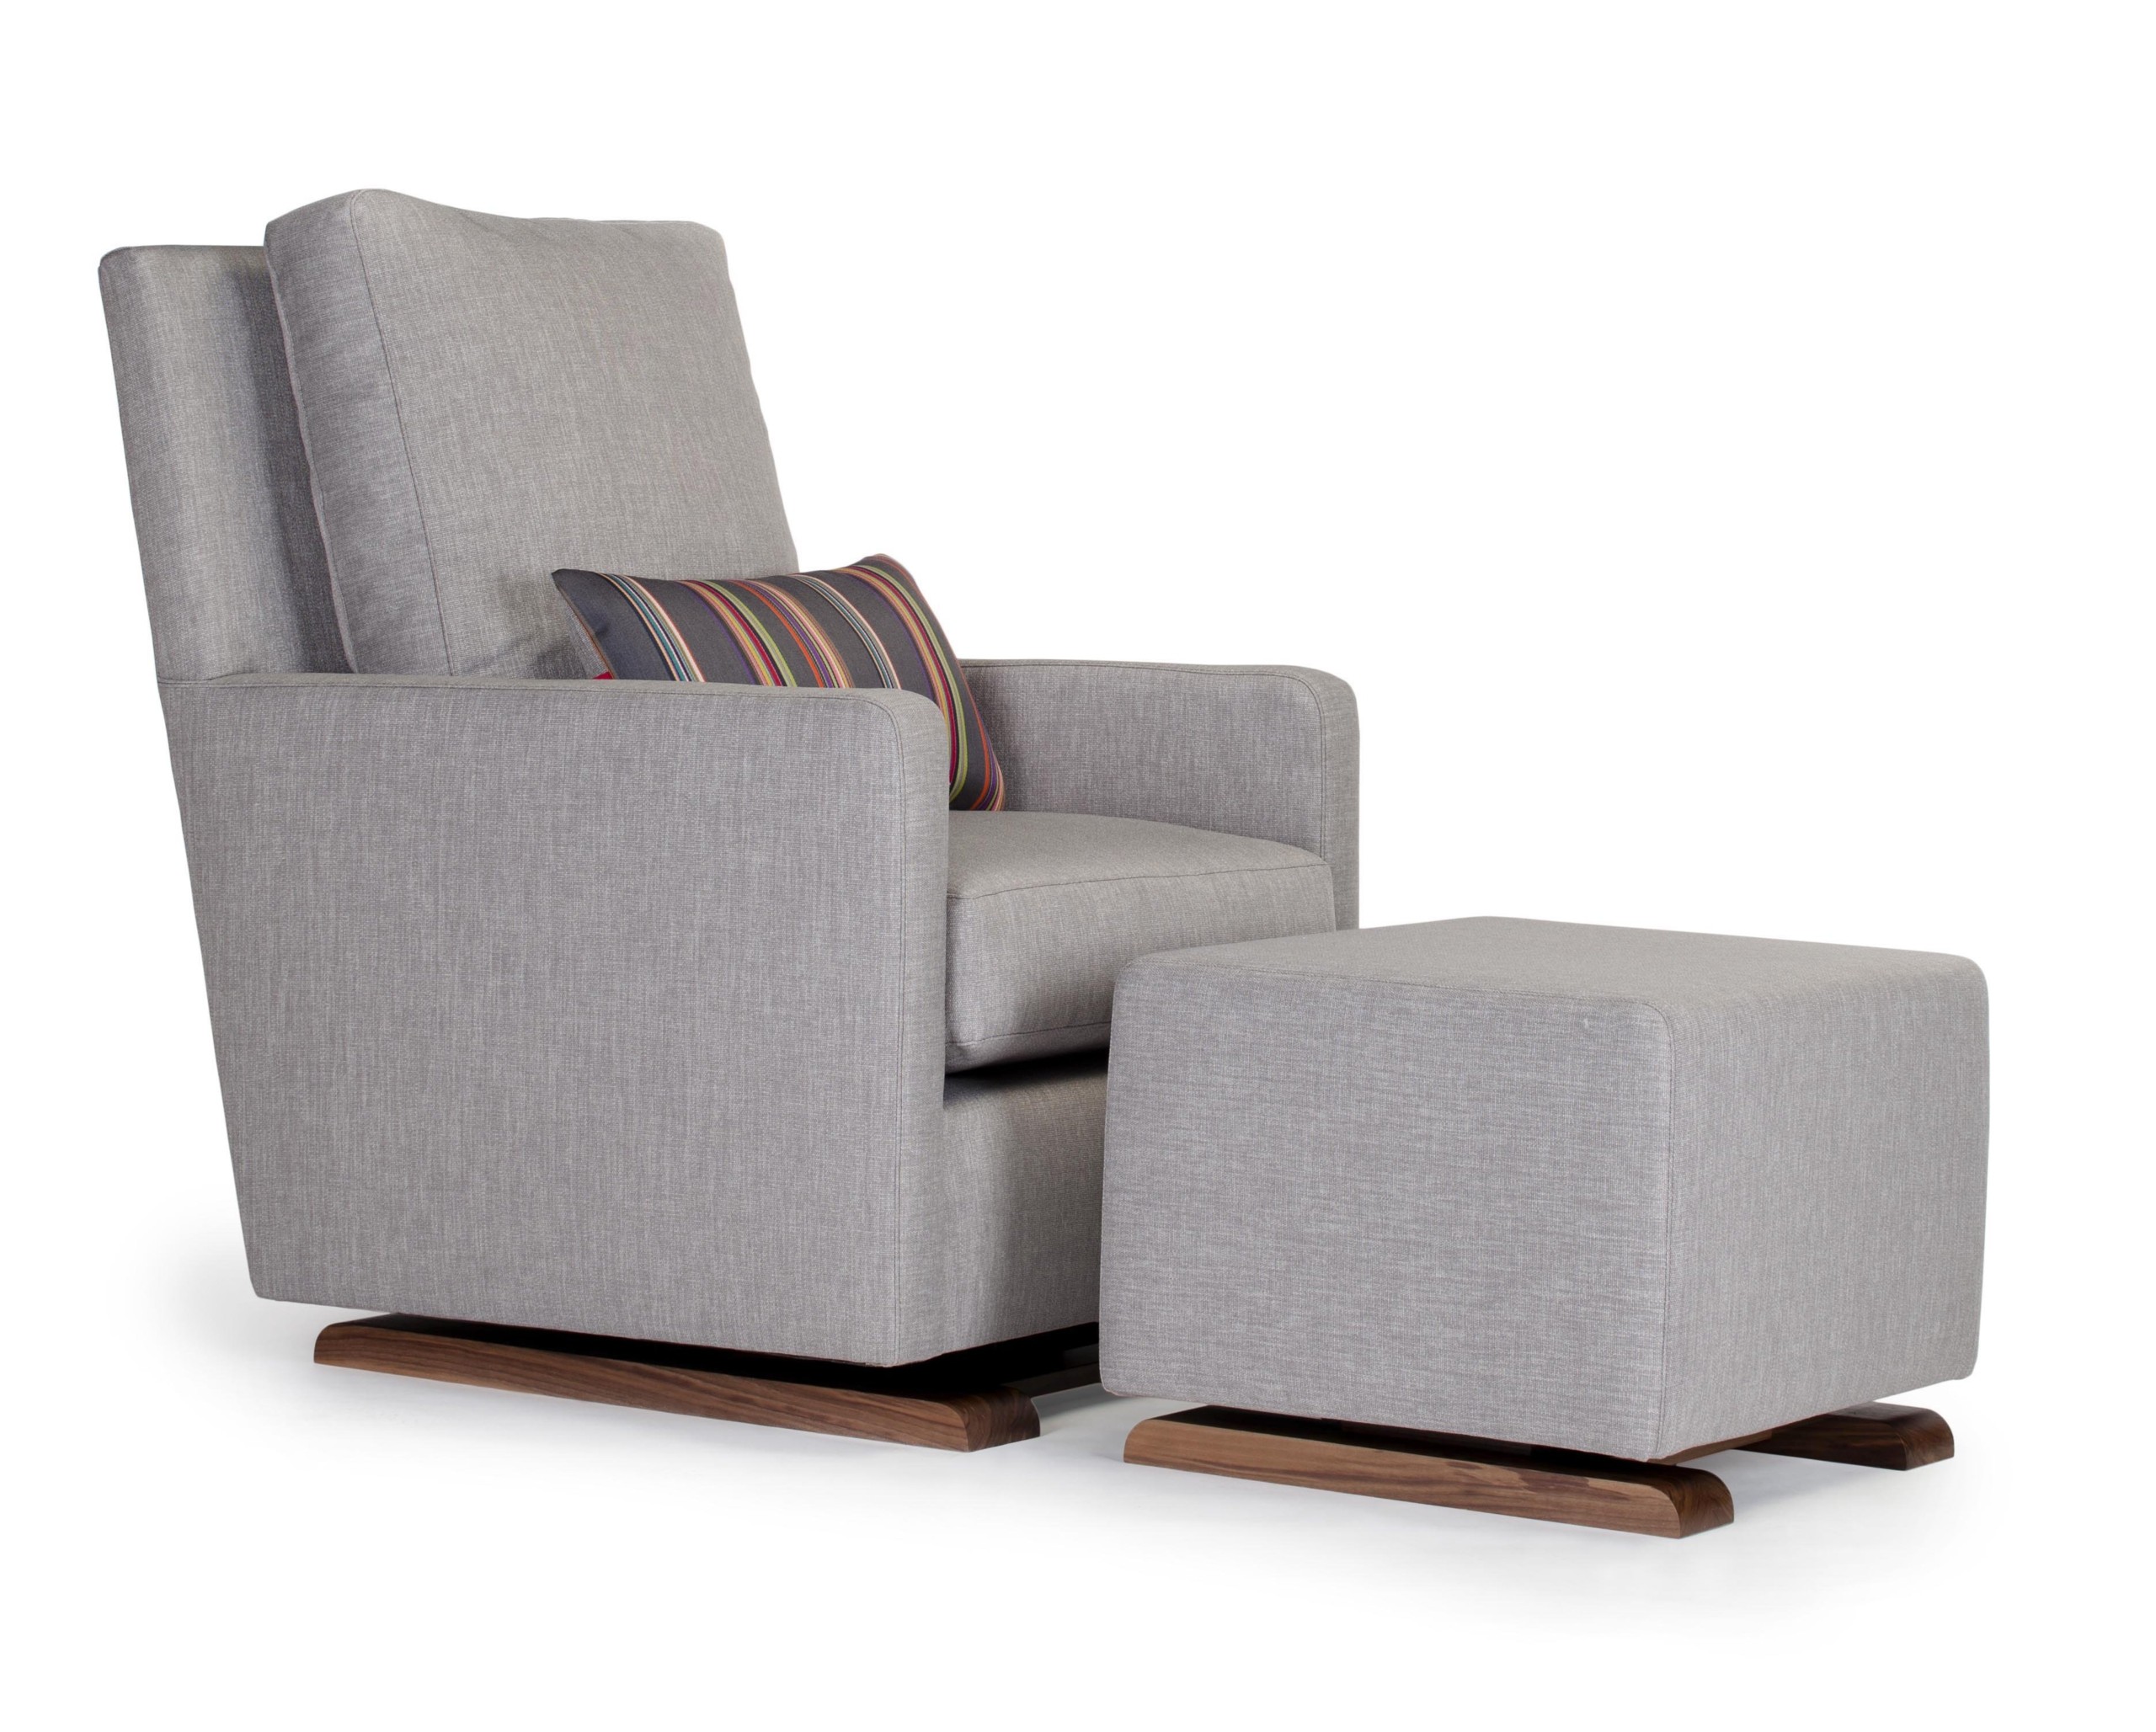 ergonomic living room chair